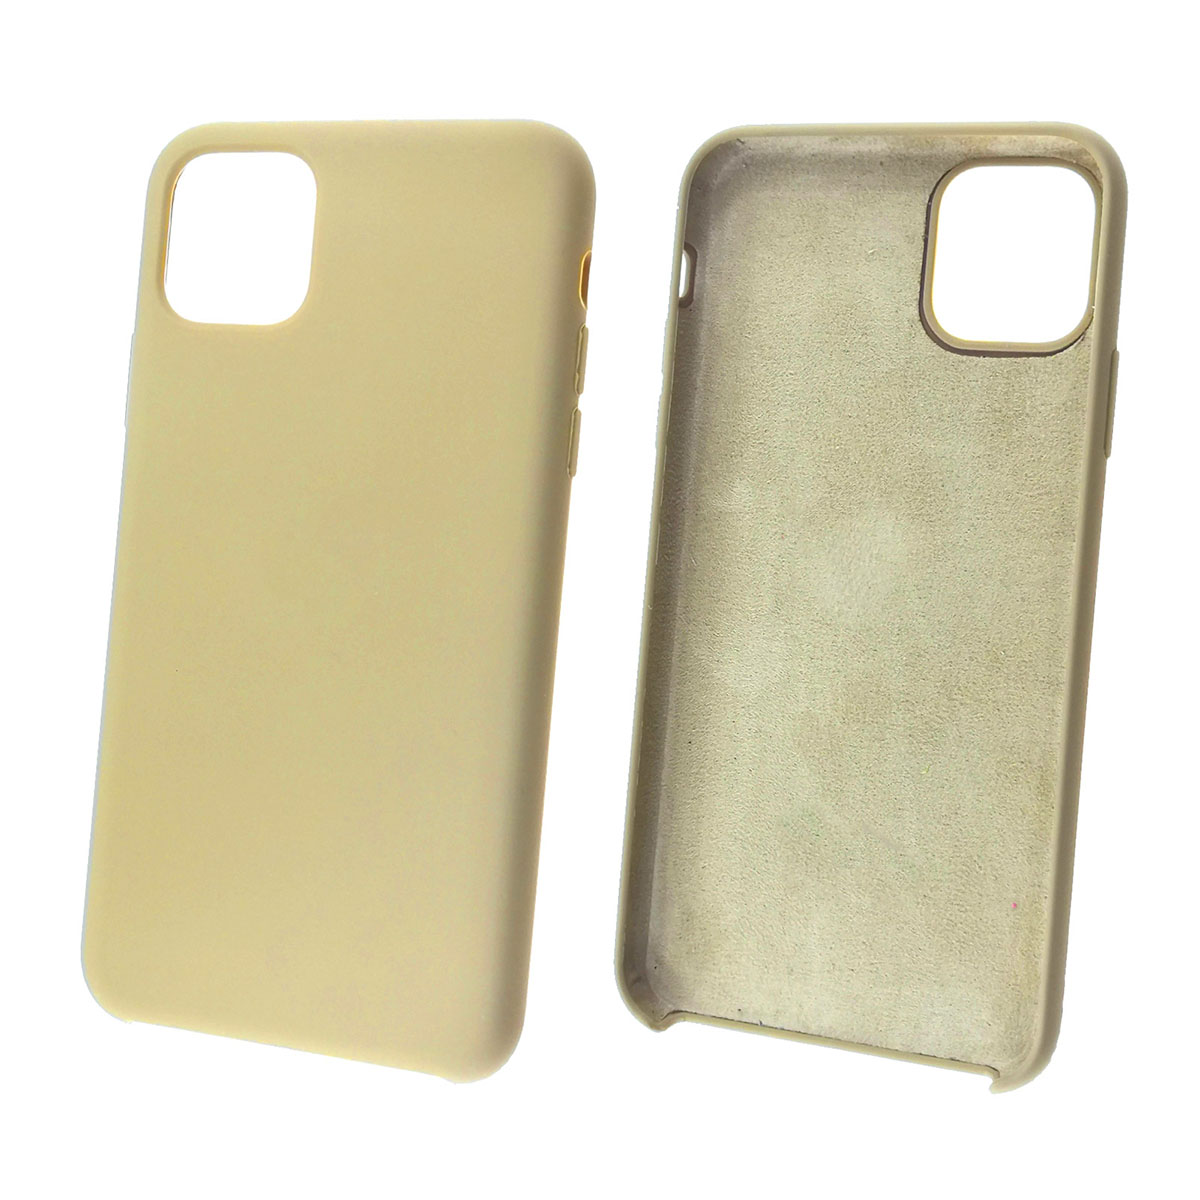 Чехол накладка Silicon Case для APPLE iPhone 11 Pro MAX 2019, силикон, бархат, цвет горчичный.